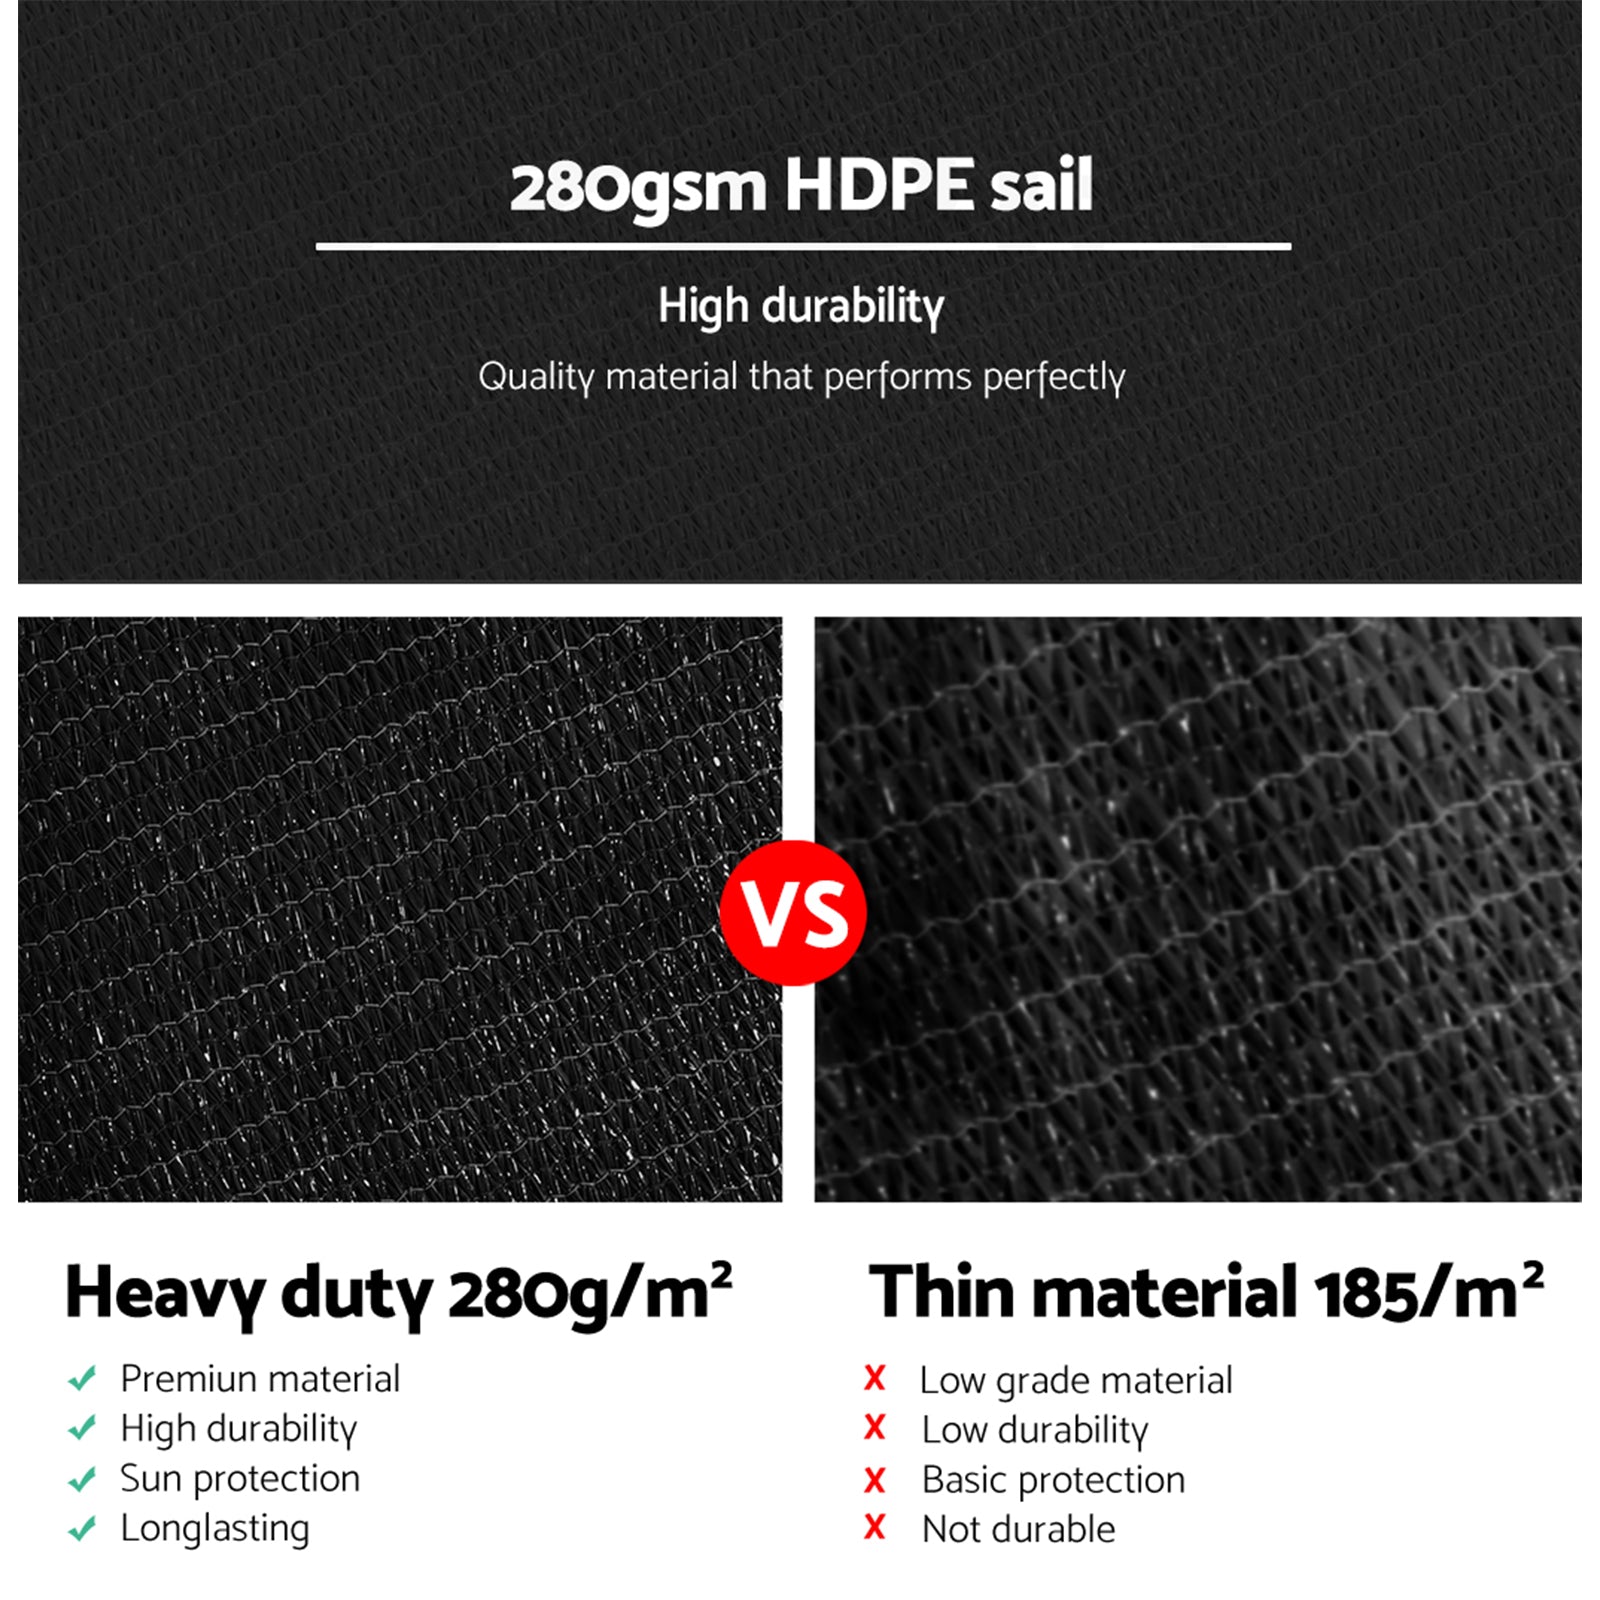 Instahut Shade Sail 6x8m Rectangle 280GSM 98% Black Shade Cloth